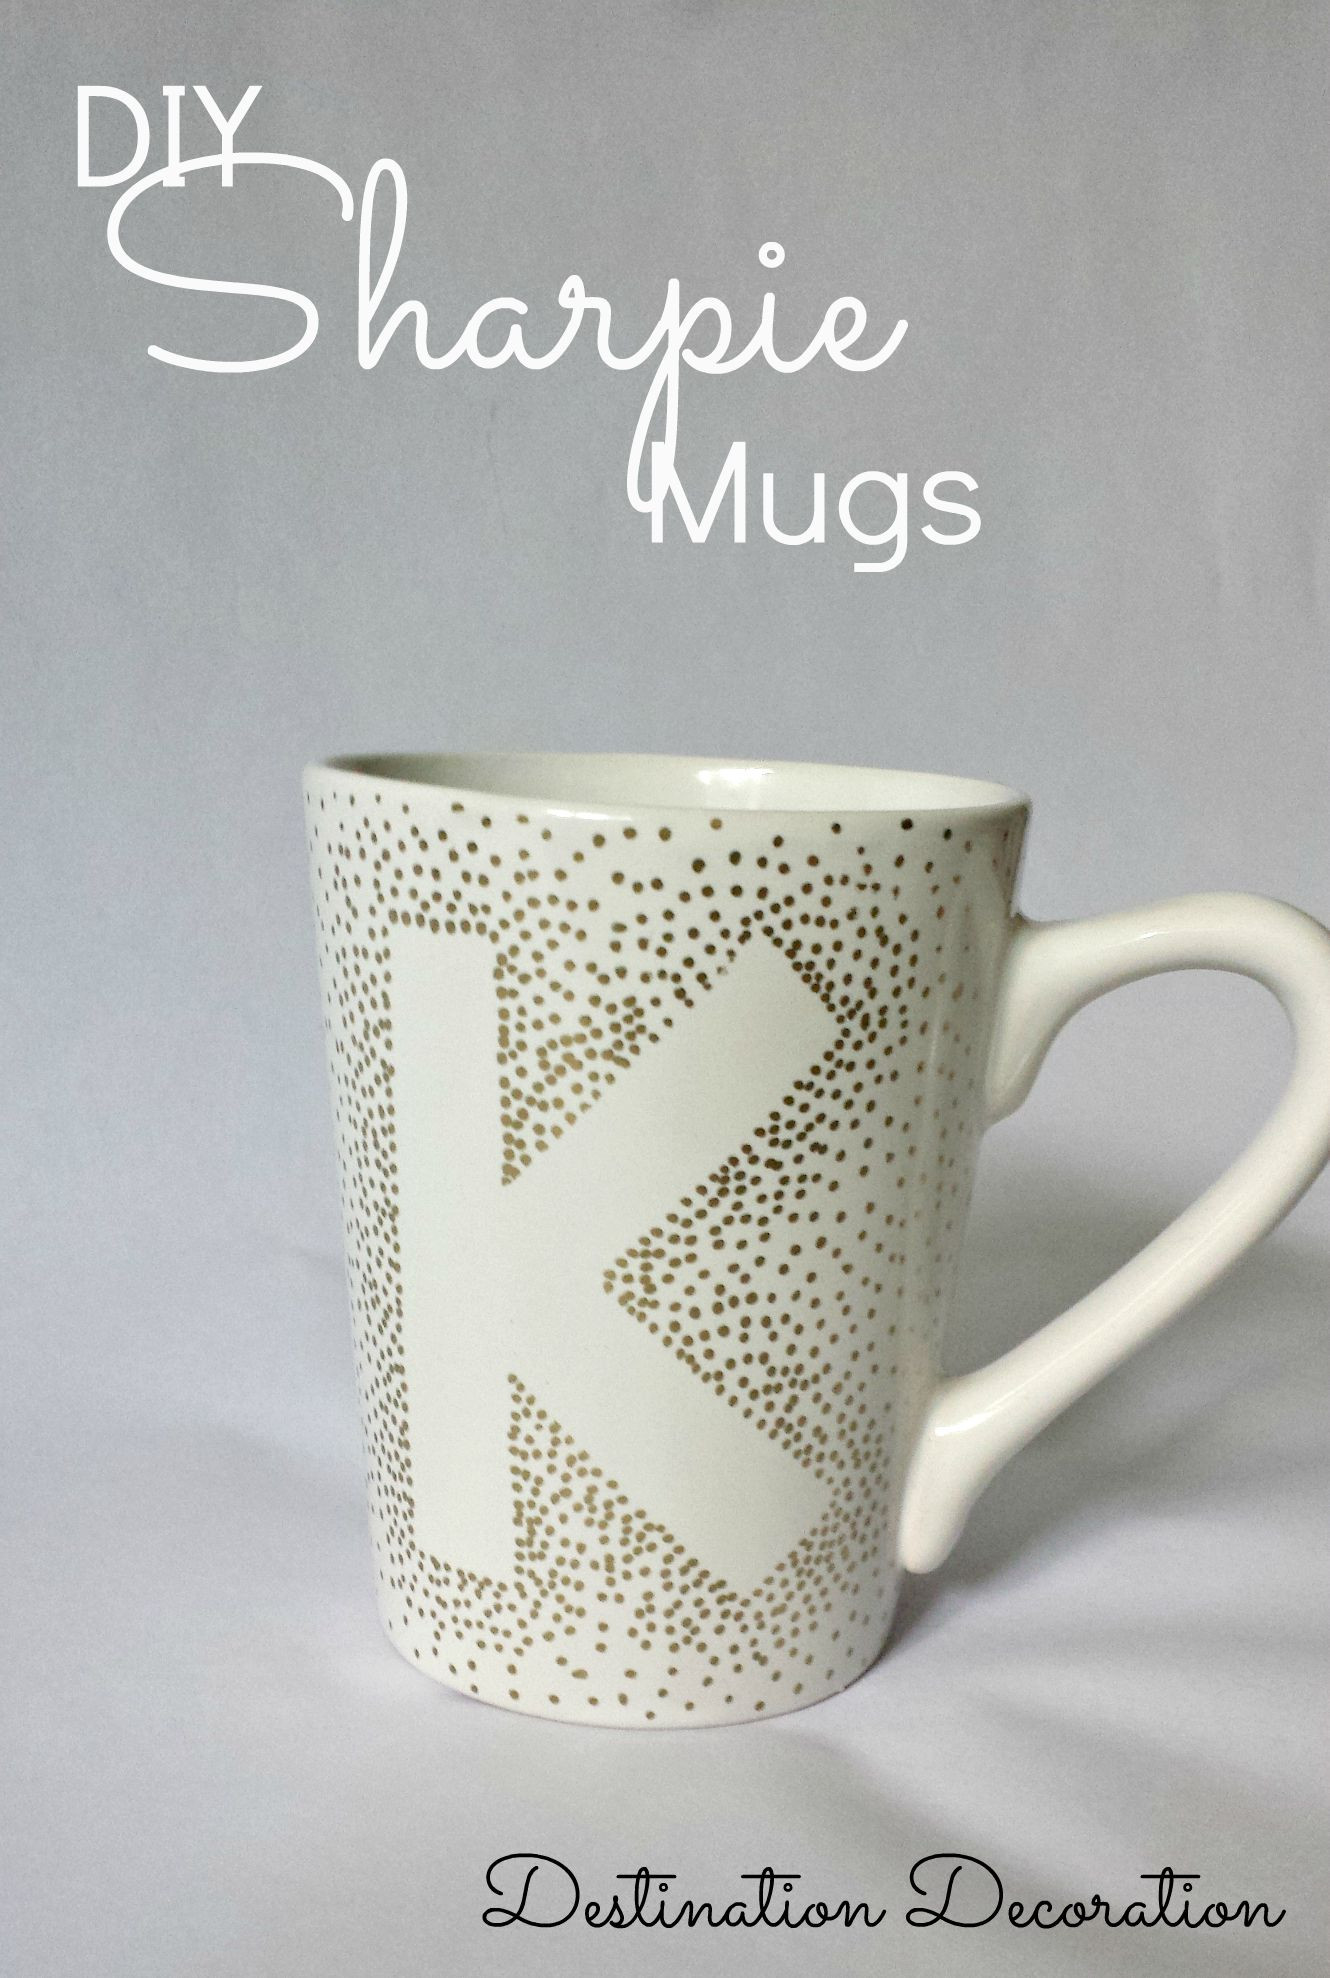 DIY Christmas Mug Gifts
 DIY Sharpie Mugs Using Dollar Tree Mugs